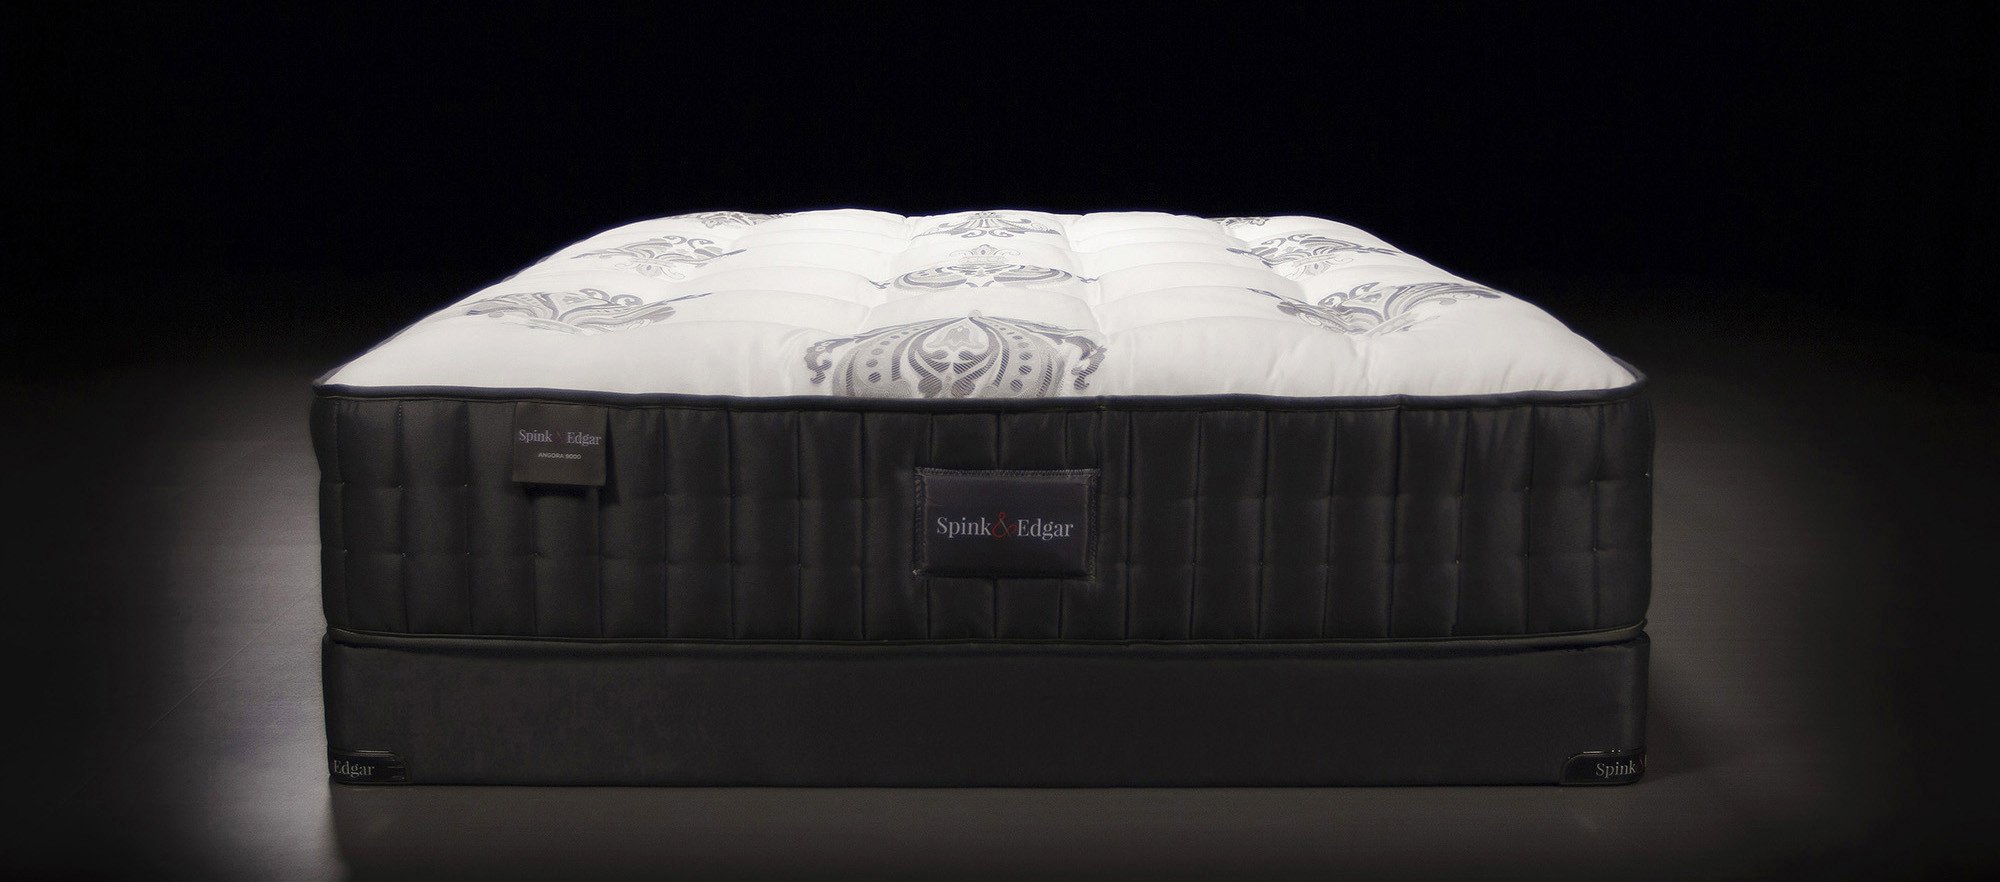 spink & edgar's handcrafted alpaca 7000 queen mattress